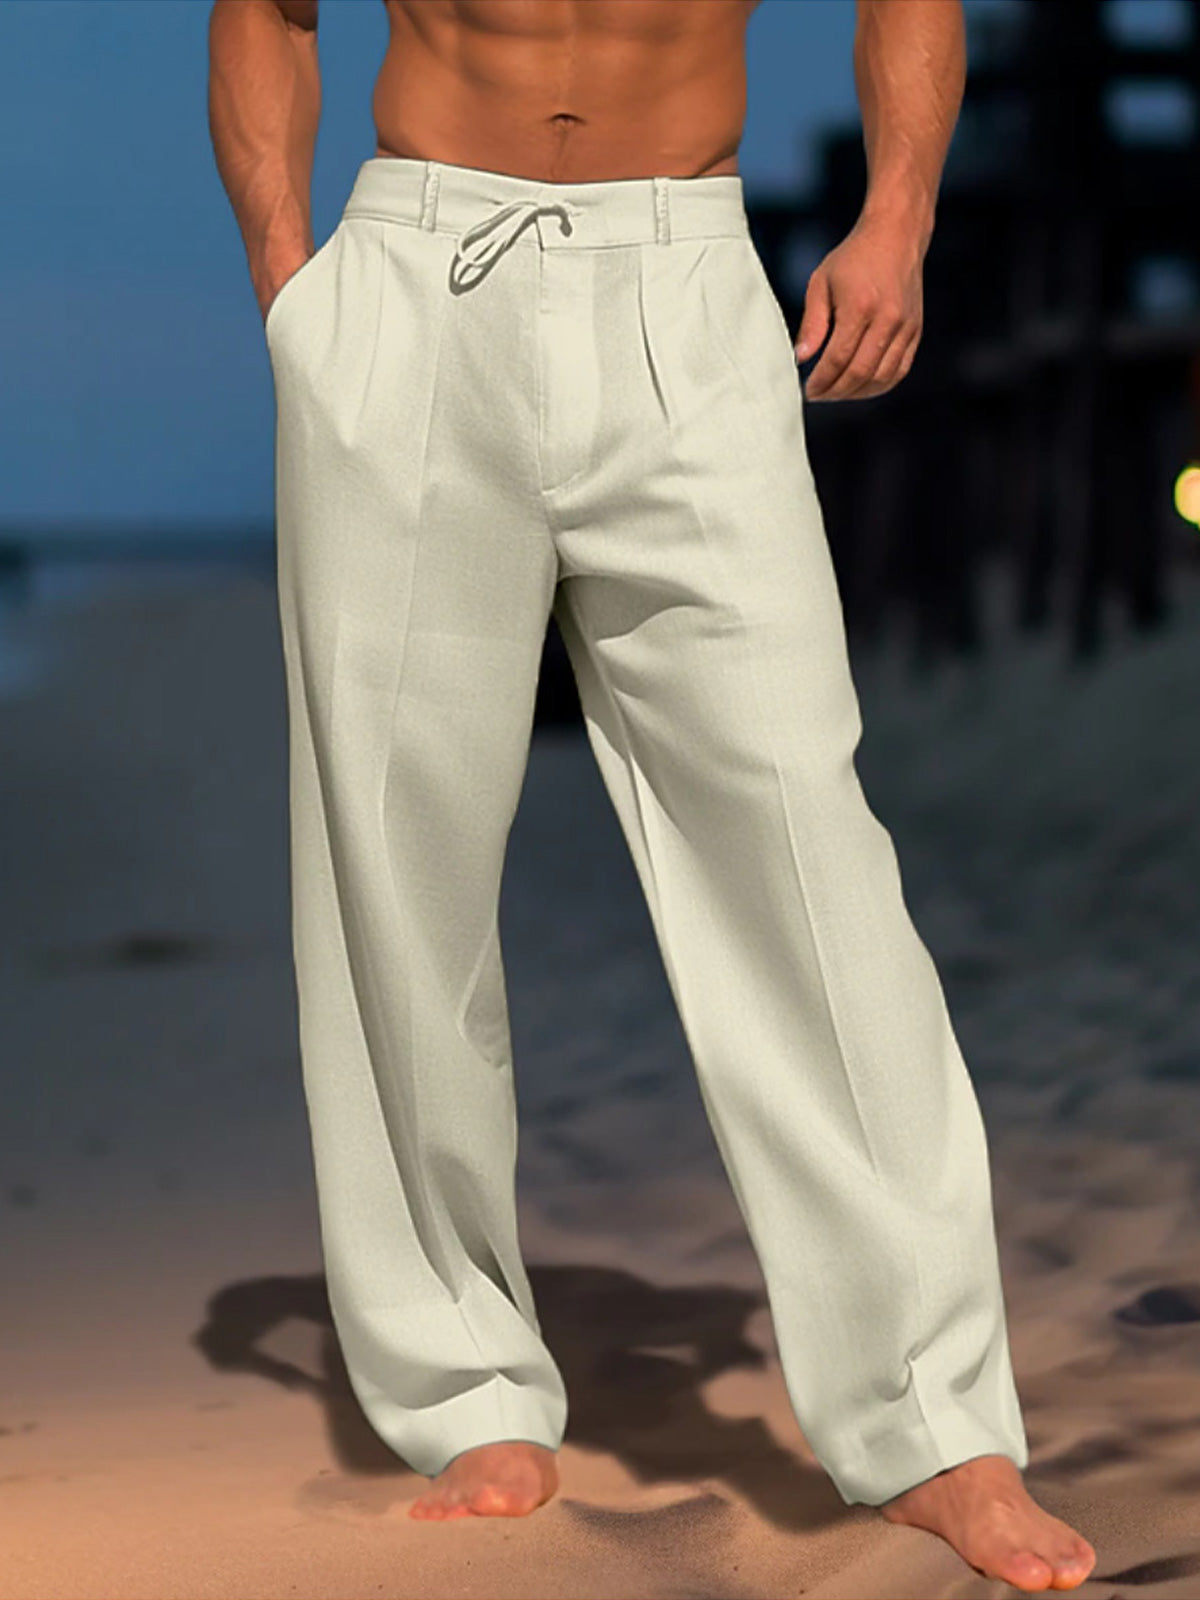 Men's cotton and linen breathable casual beach pants